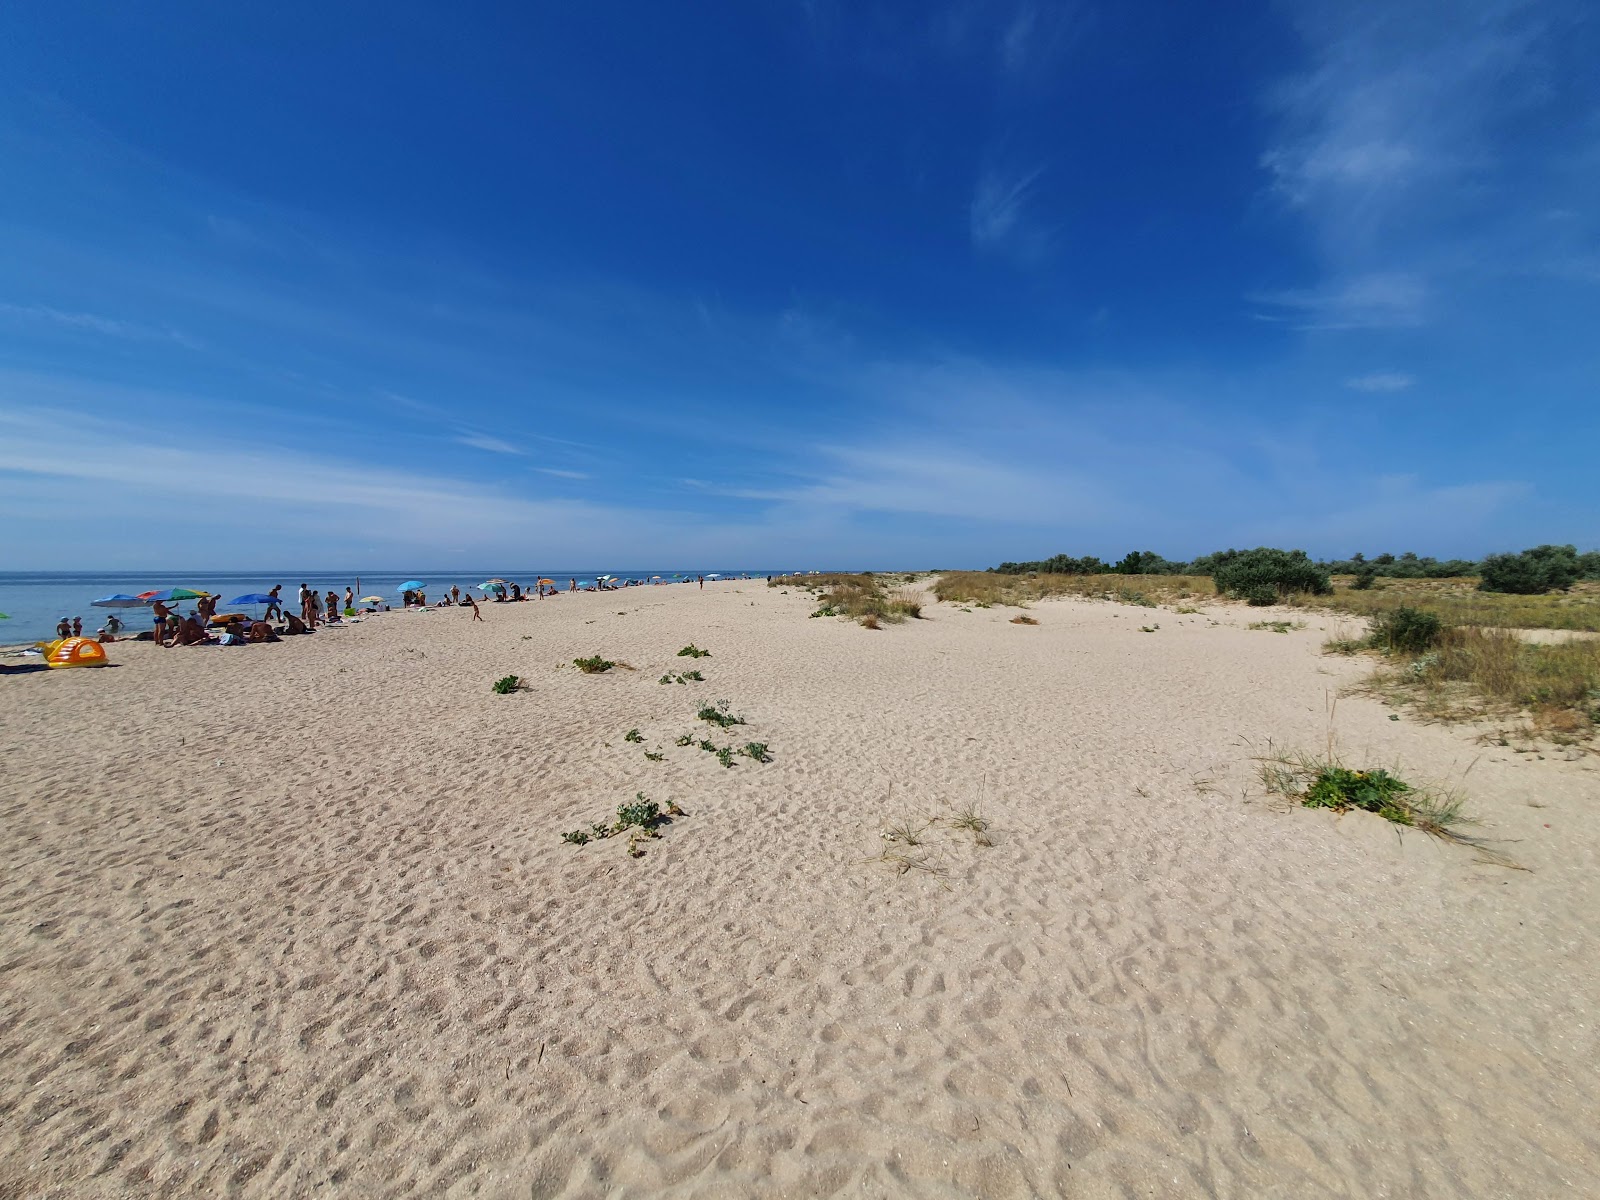 Foto von Dal'nya Kosa mit langer gerader strand